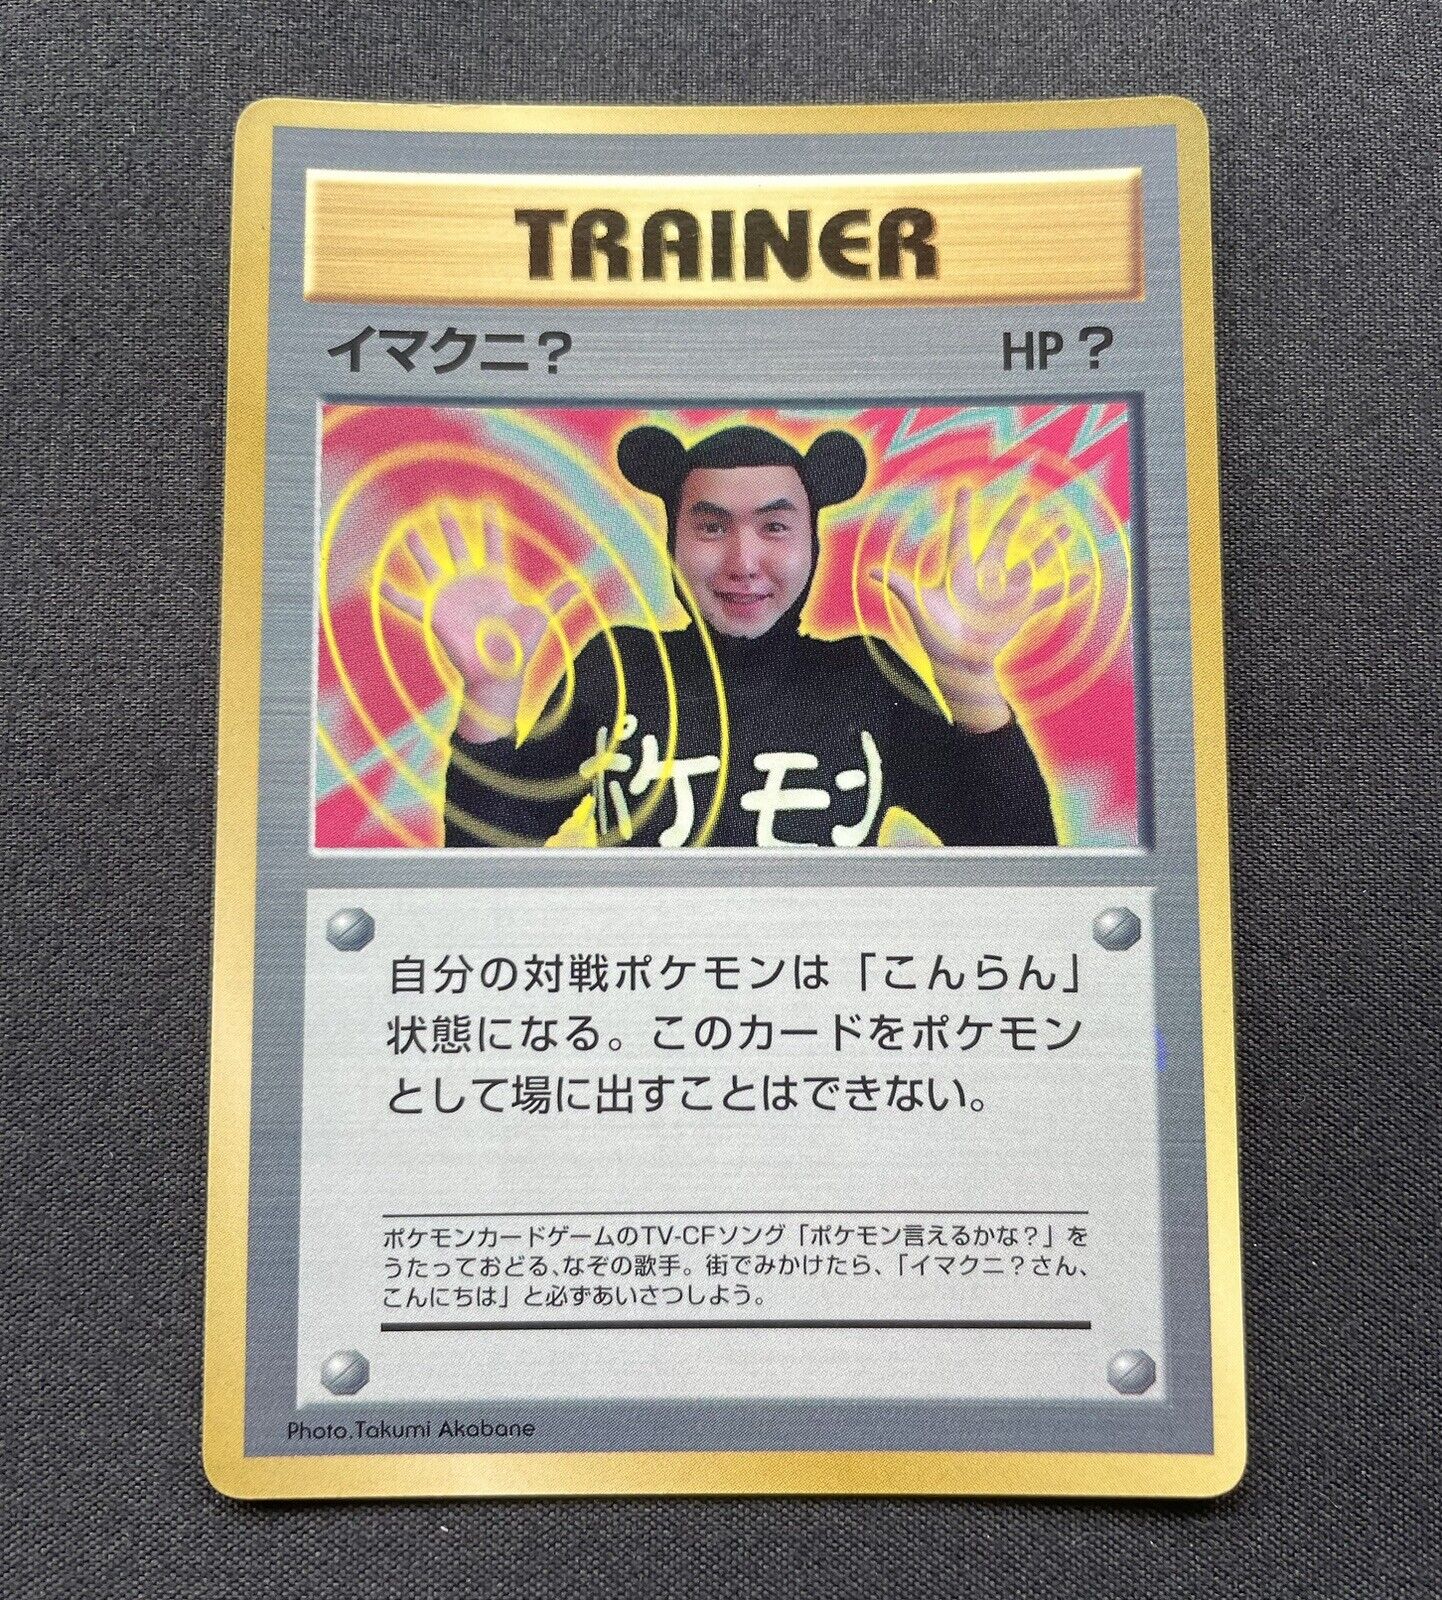 Imankuni Hp? - Trainer Japanese Pokemon Glossy Promo Card - UK